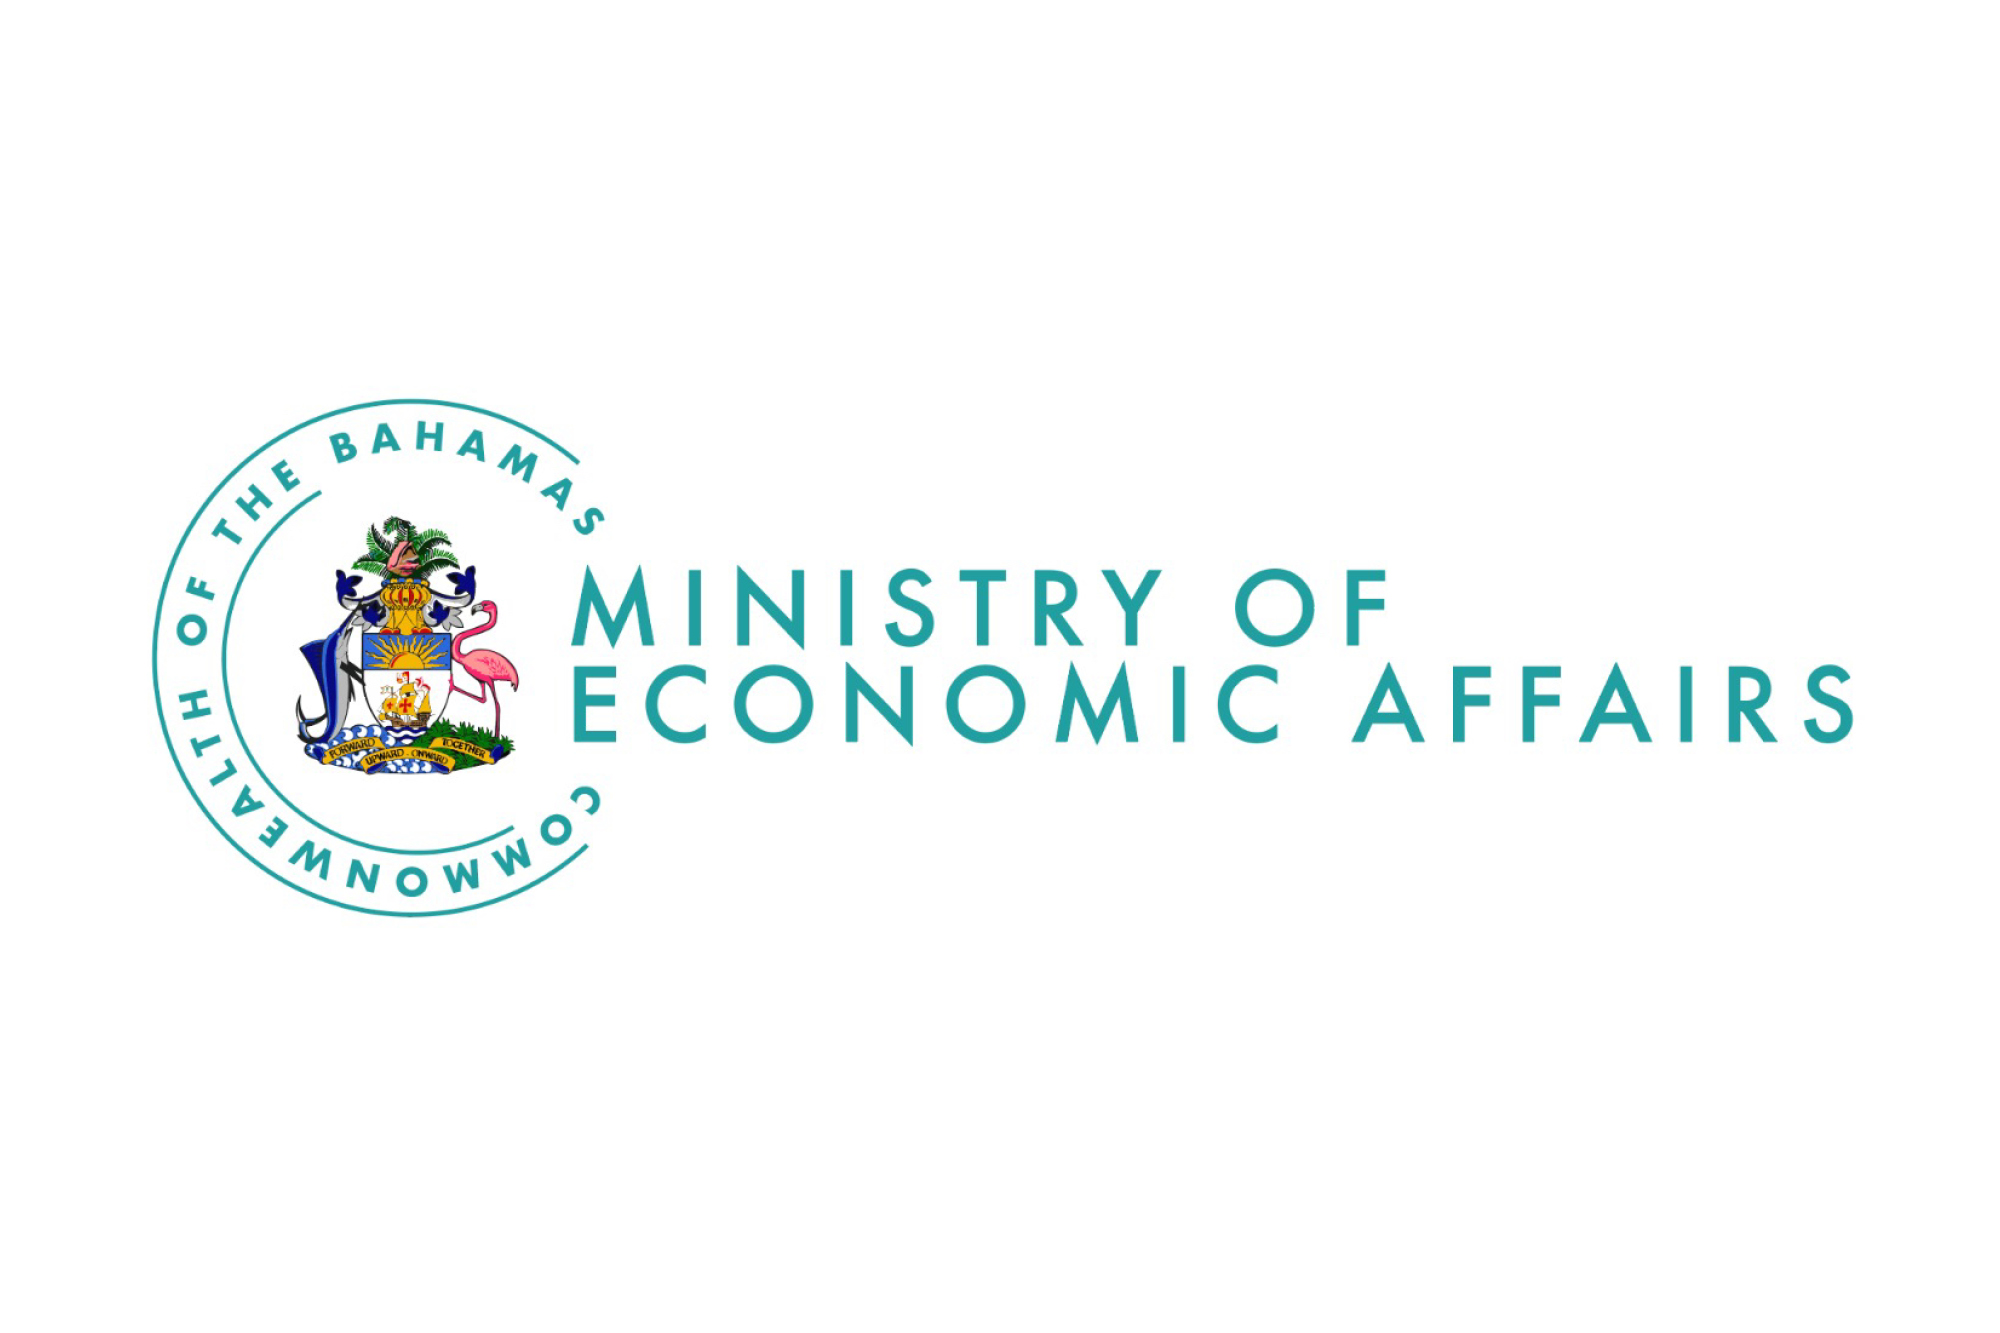 The Bahamas Ministry of Economic Affairs